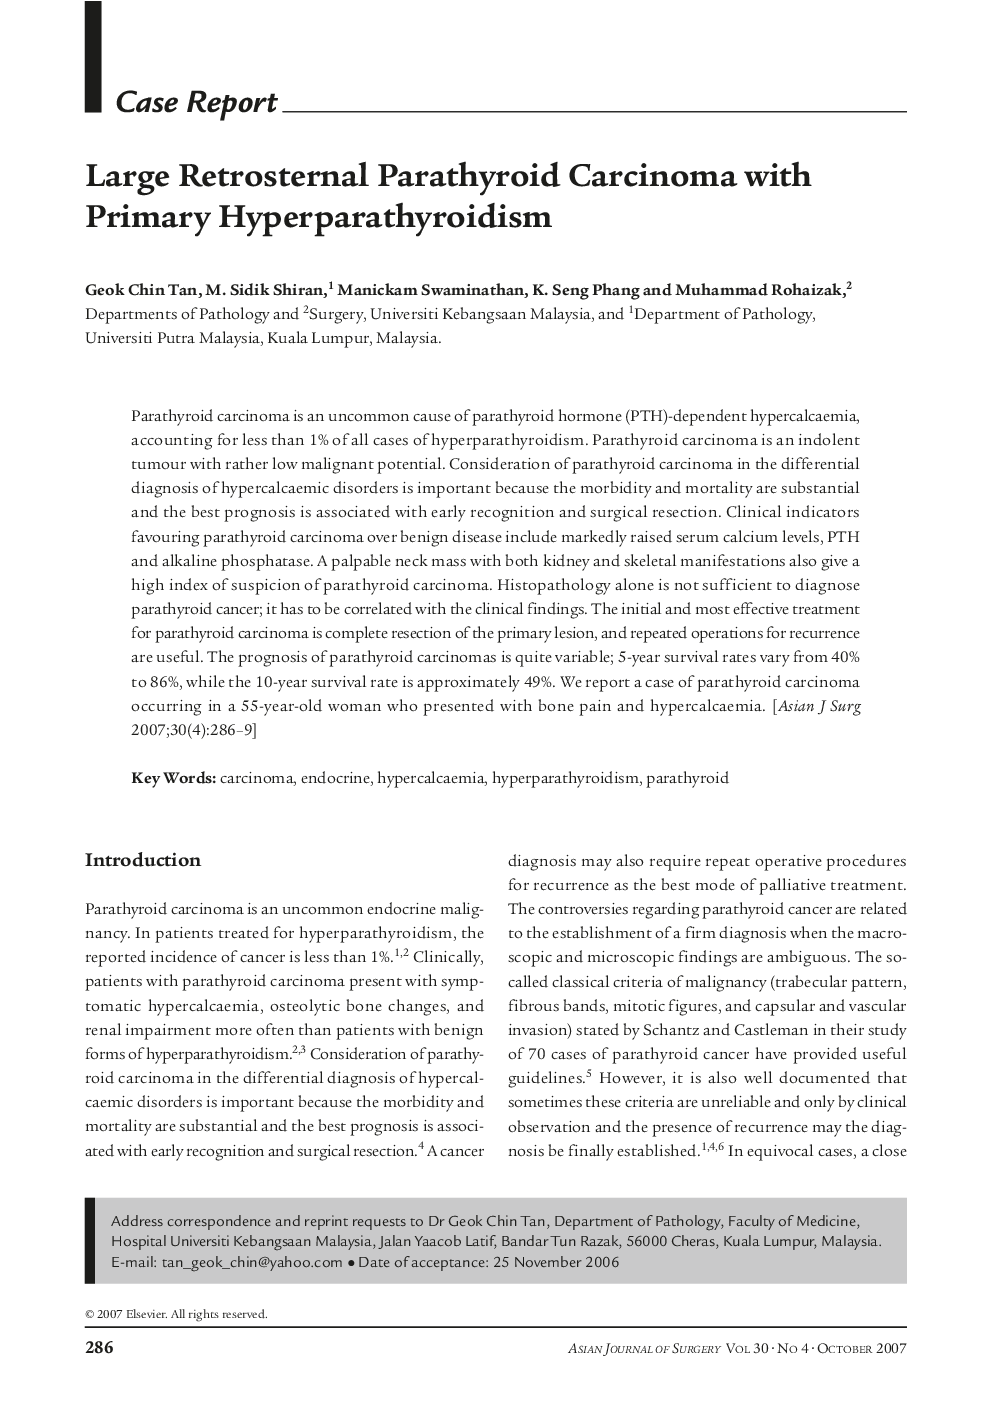 Large Retrosternal Parathyroid Carcinoma with Primary Hyperparathyroidism